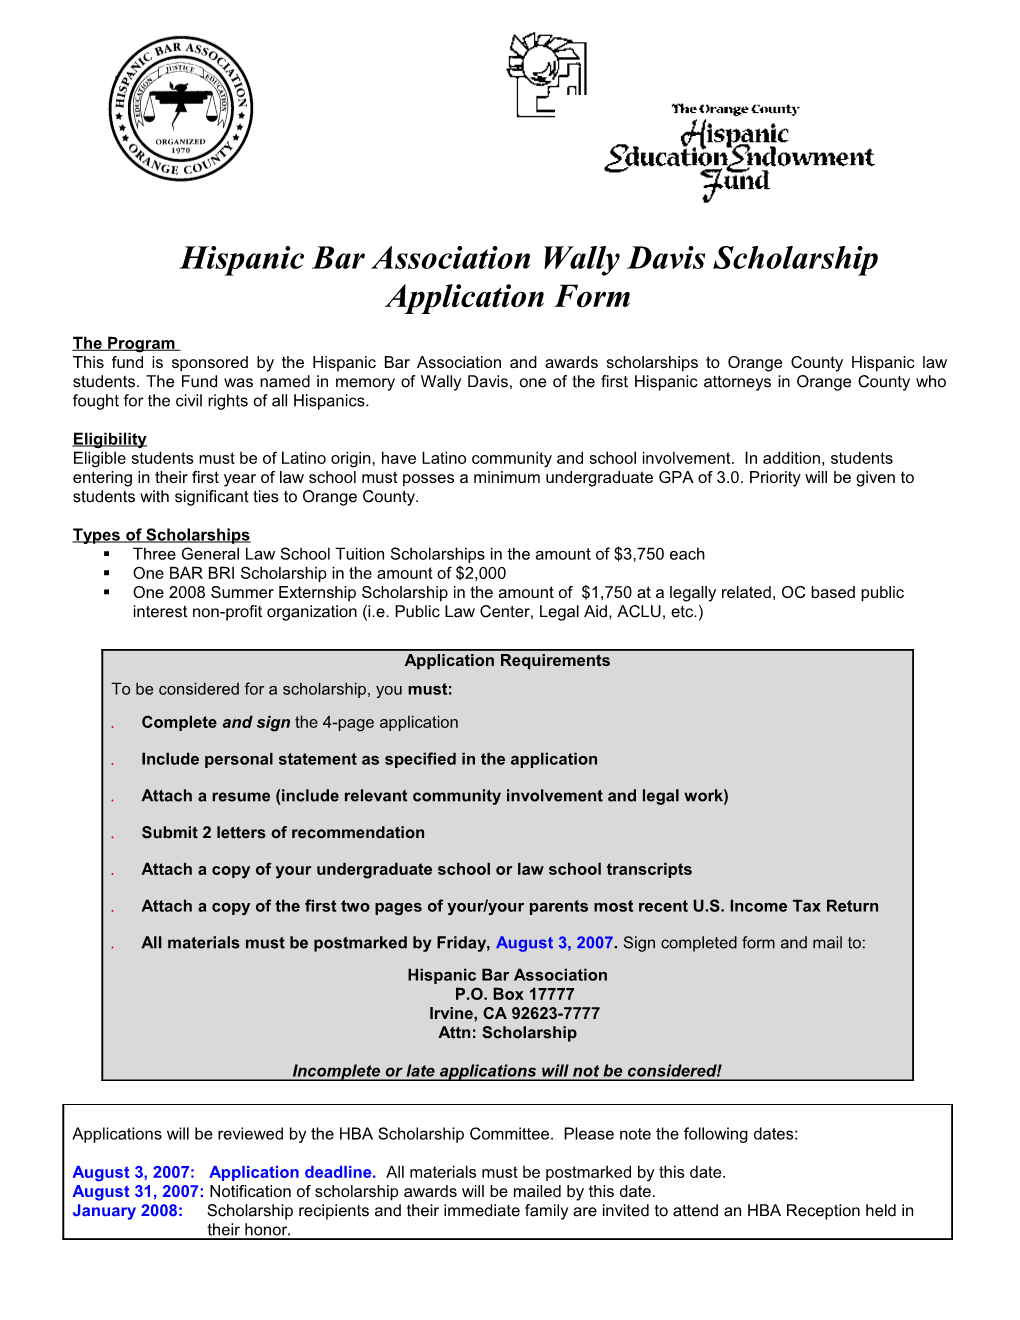 Hispanic Bar Association Wally Davis Scholarship Application Form